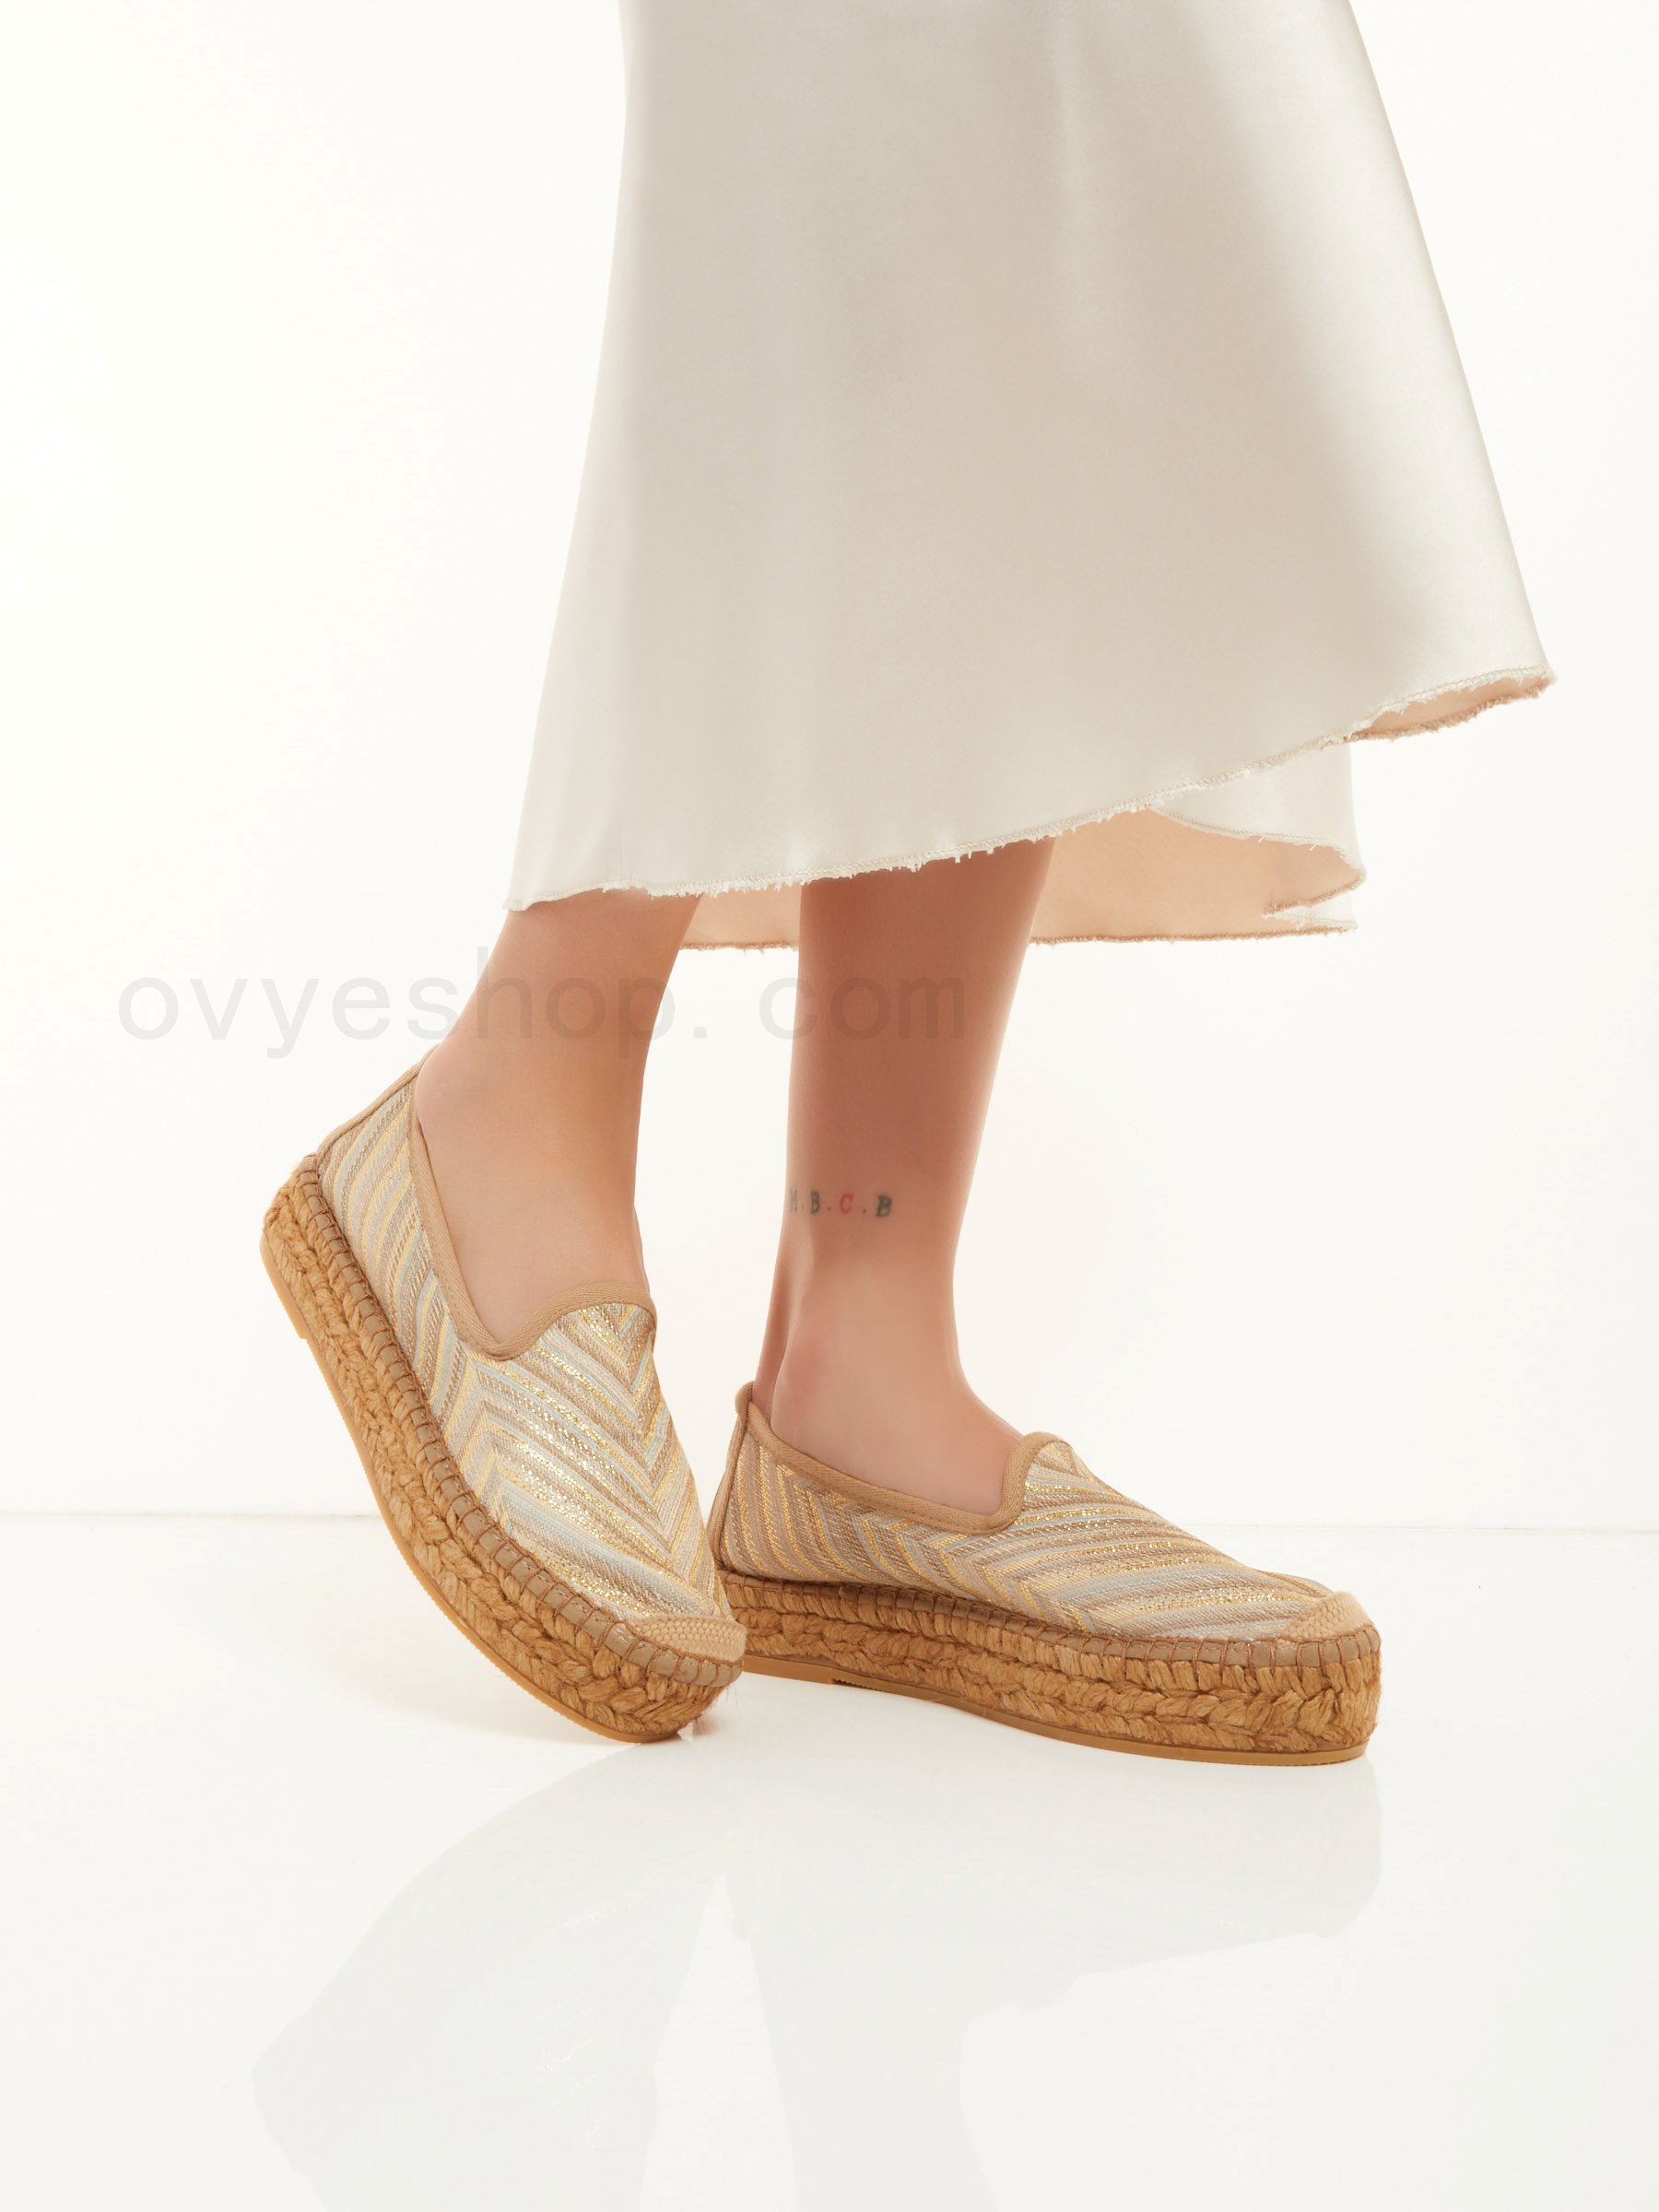 (image for) ovye scarpe Fabric Espadrillas F0817885-0790 85% Codice Sconto